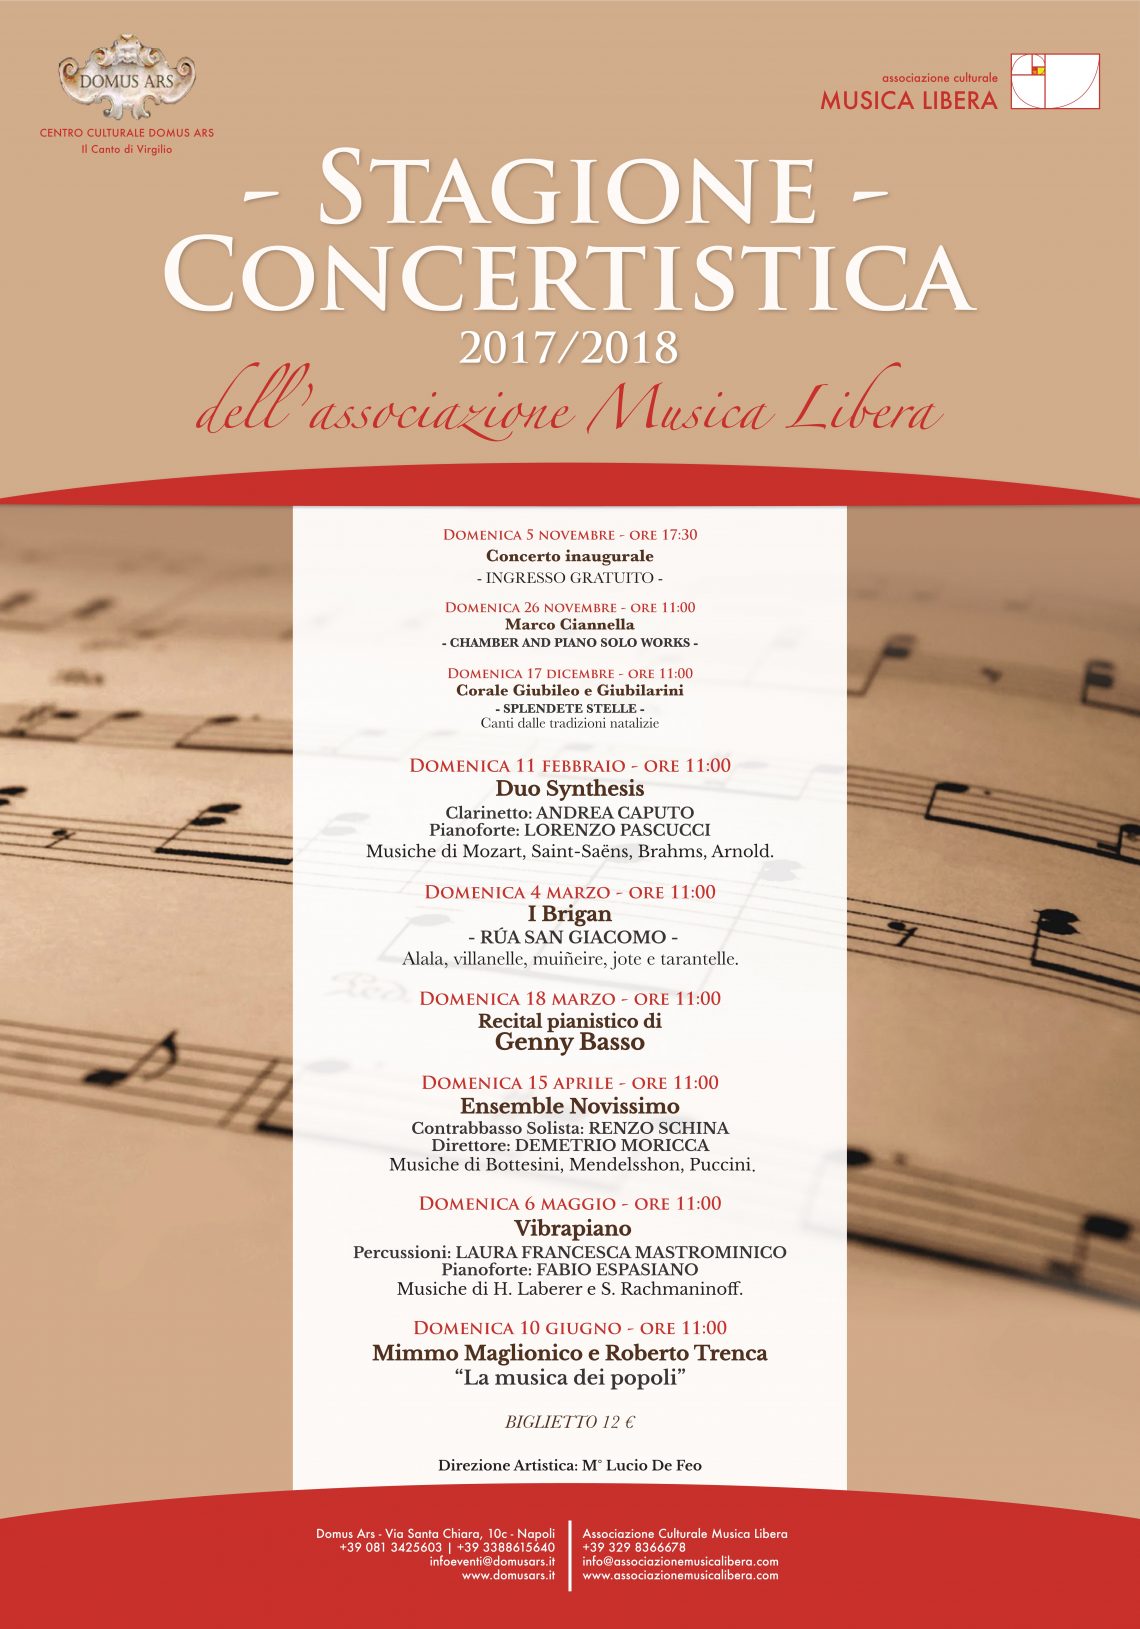 Concerto del Duo Synthesis alla Domus Ars. Domenica 11 febbraio